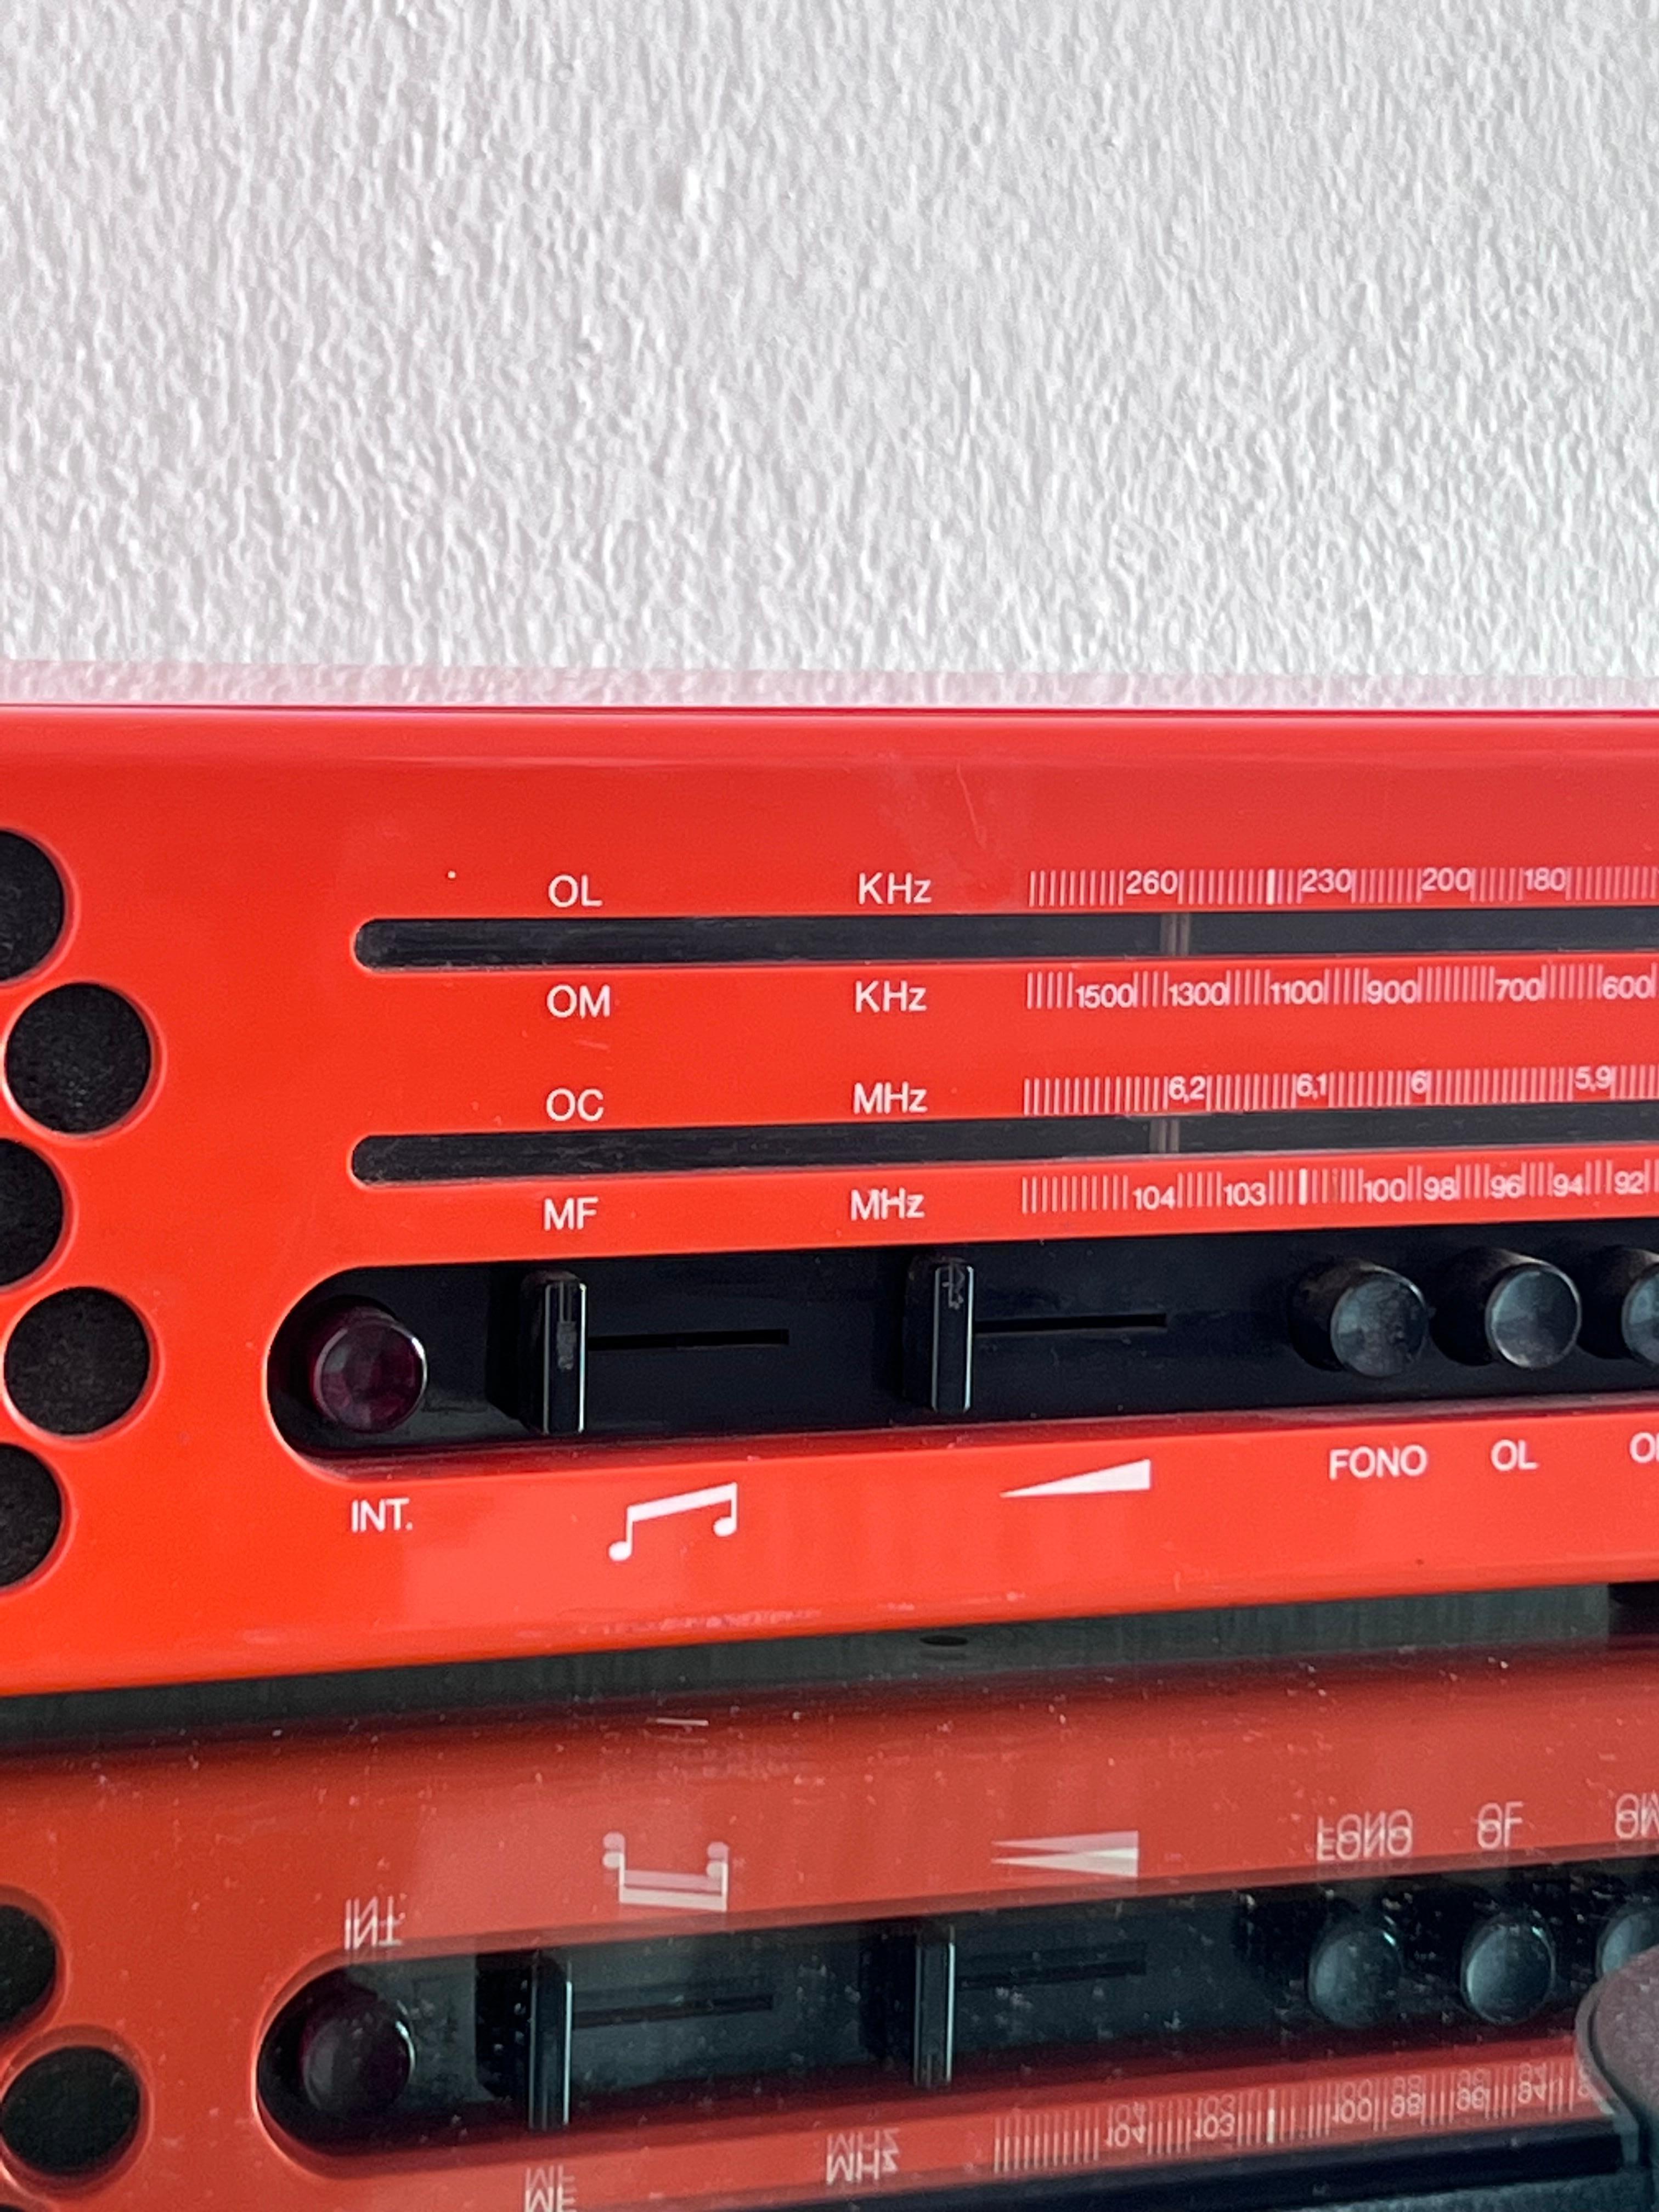 Plastique Telefunken KRA radio vintage en bakélite rouge de fabrication allemande, design pop de l'ère spatiale en vente